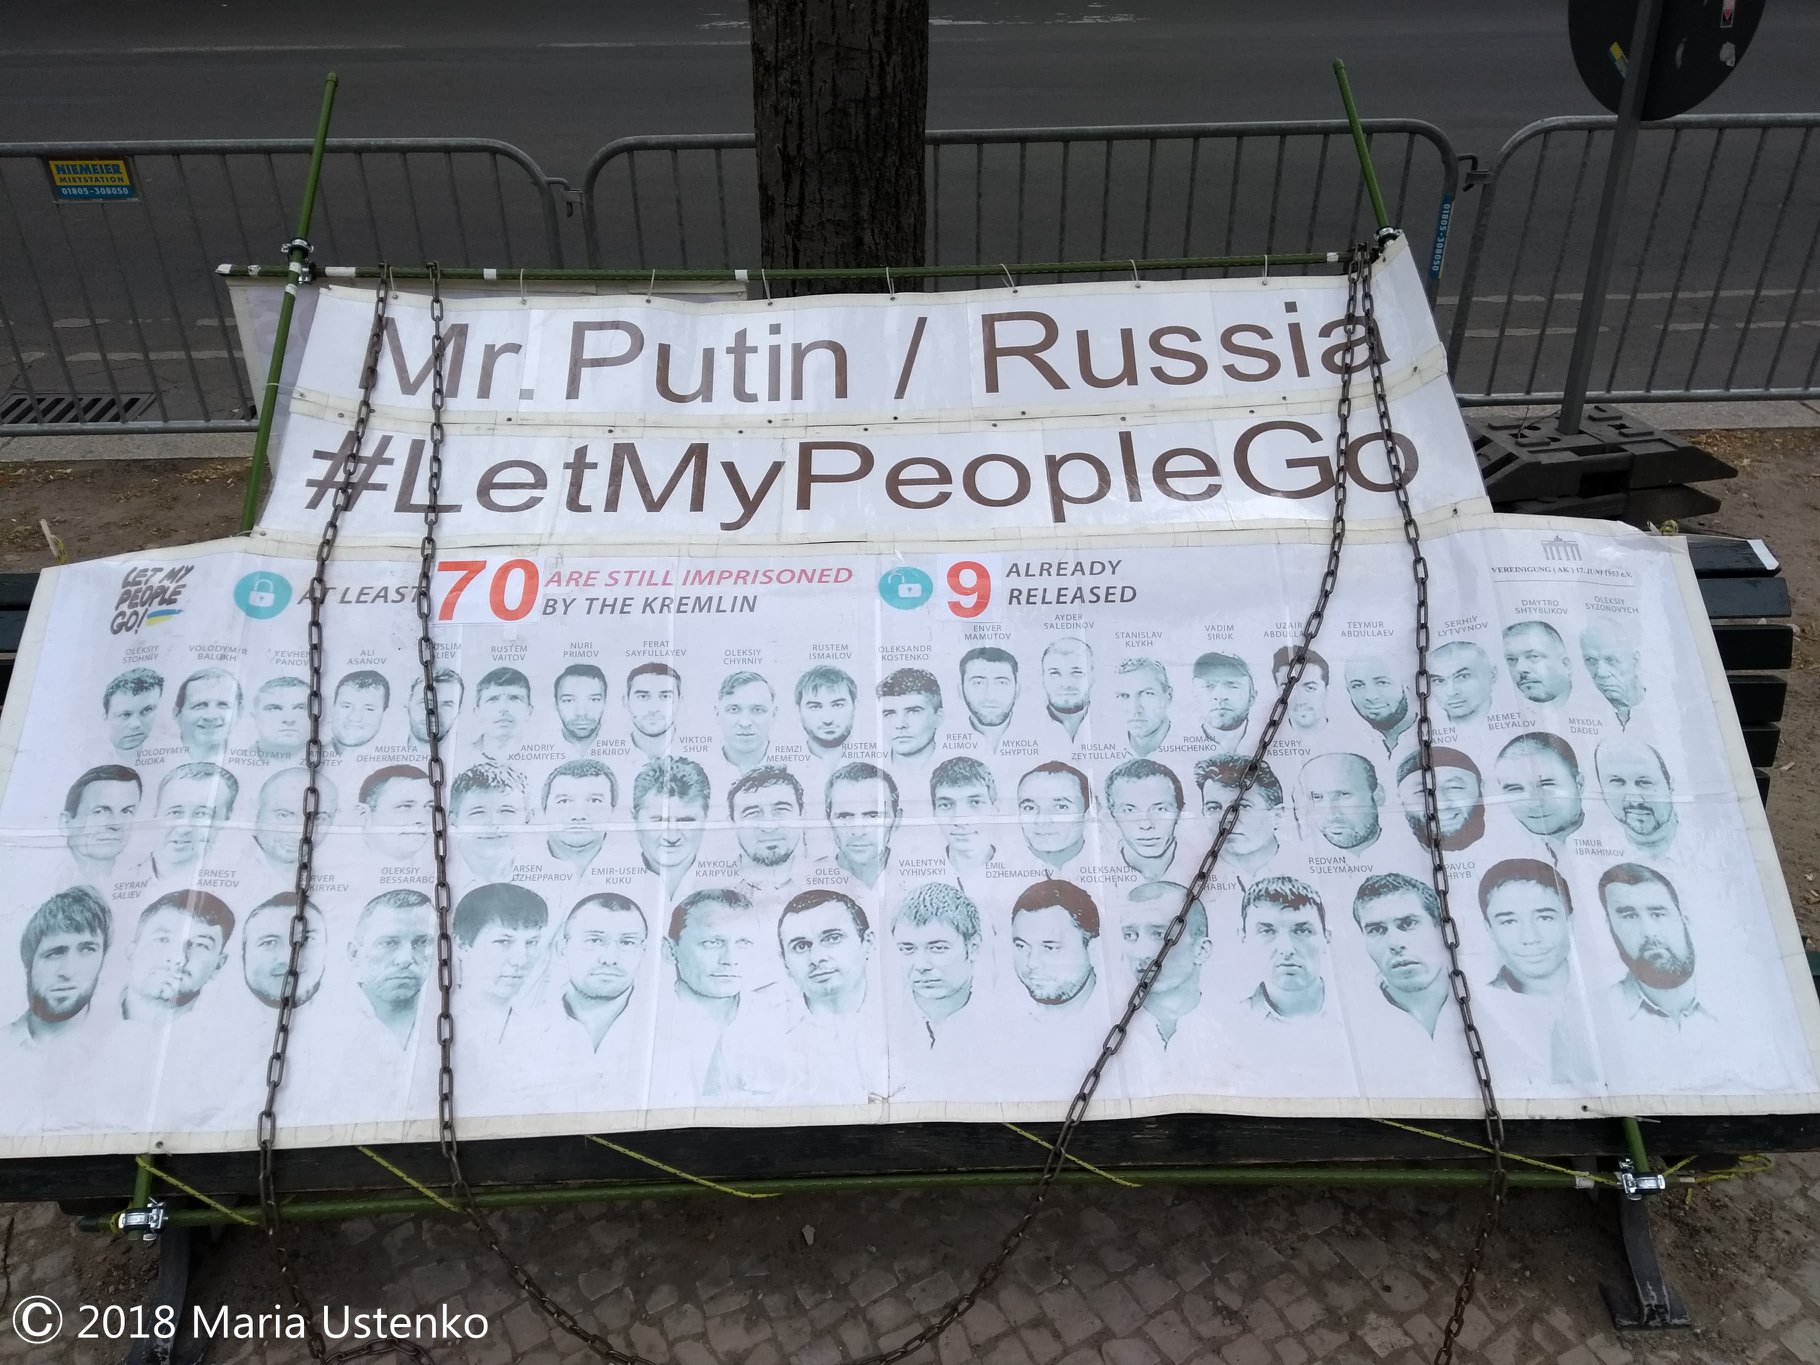 EU calls on Russia to release Sentsov and all Ukrainian political prisoners